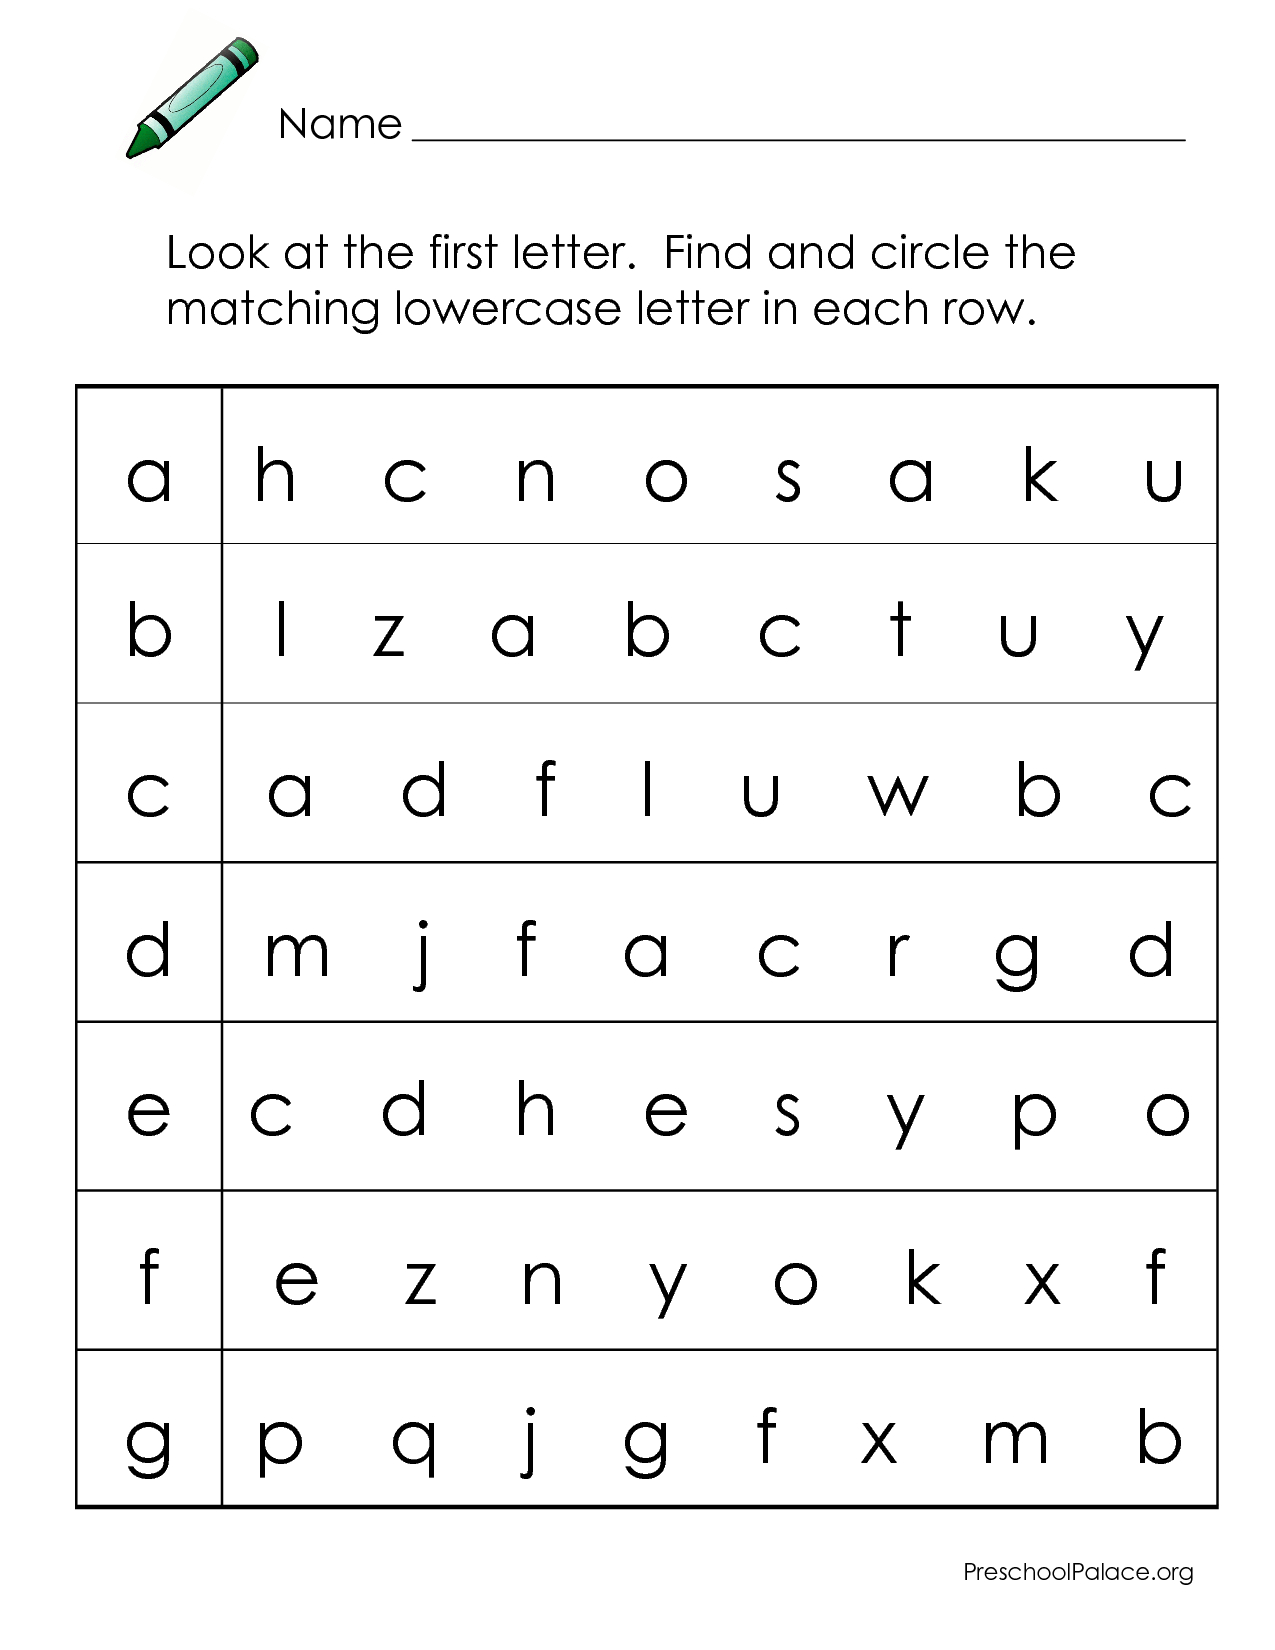 Alphabet Worksheets For Preschoolers | Abcs - Letter for Alphabet Worksheets For Preschool